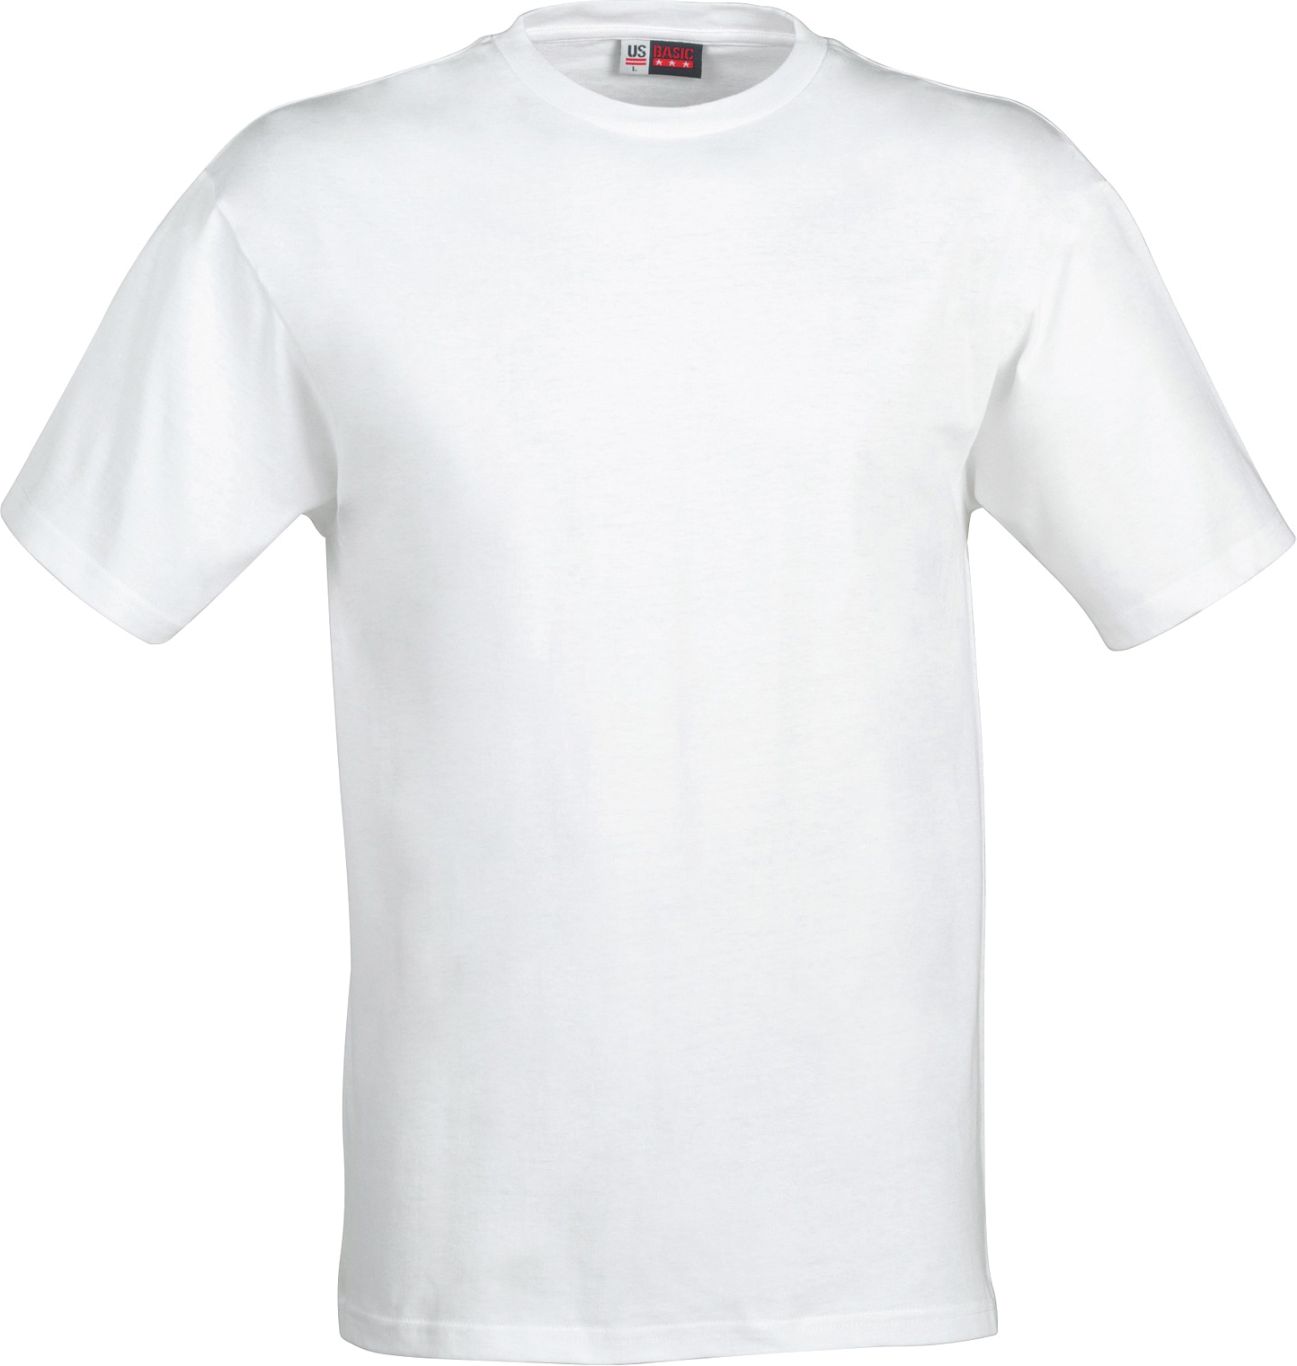 White T-shirt PNG image    图片编号:5435